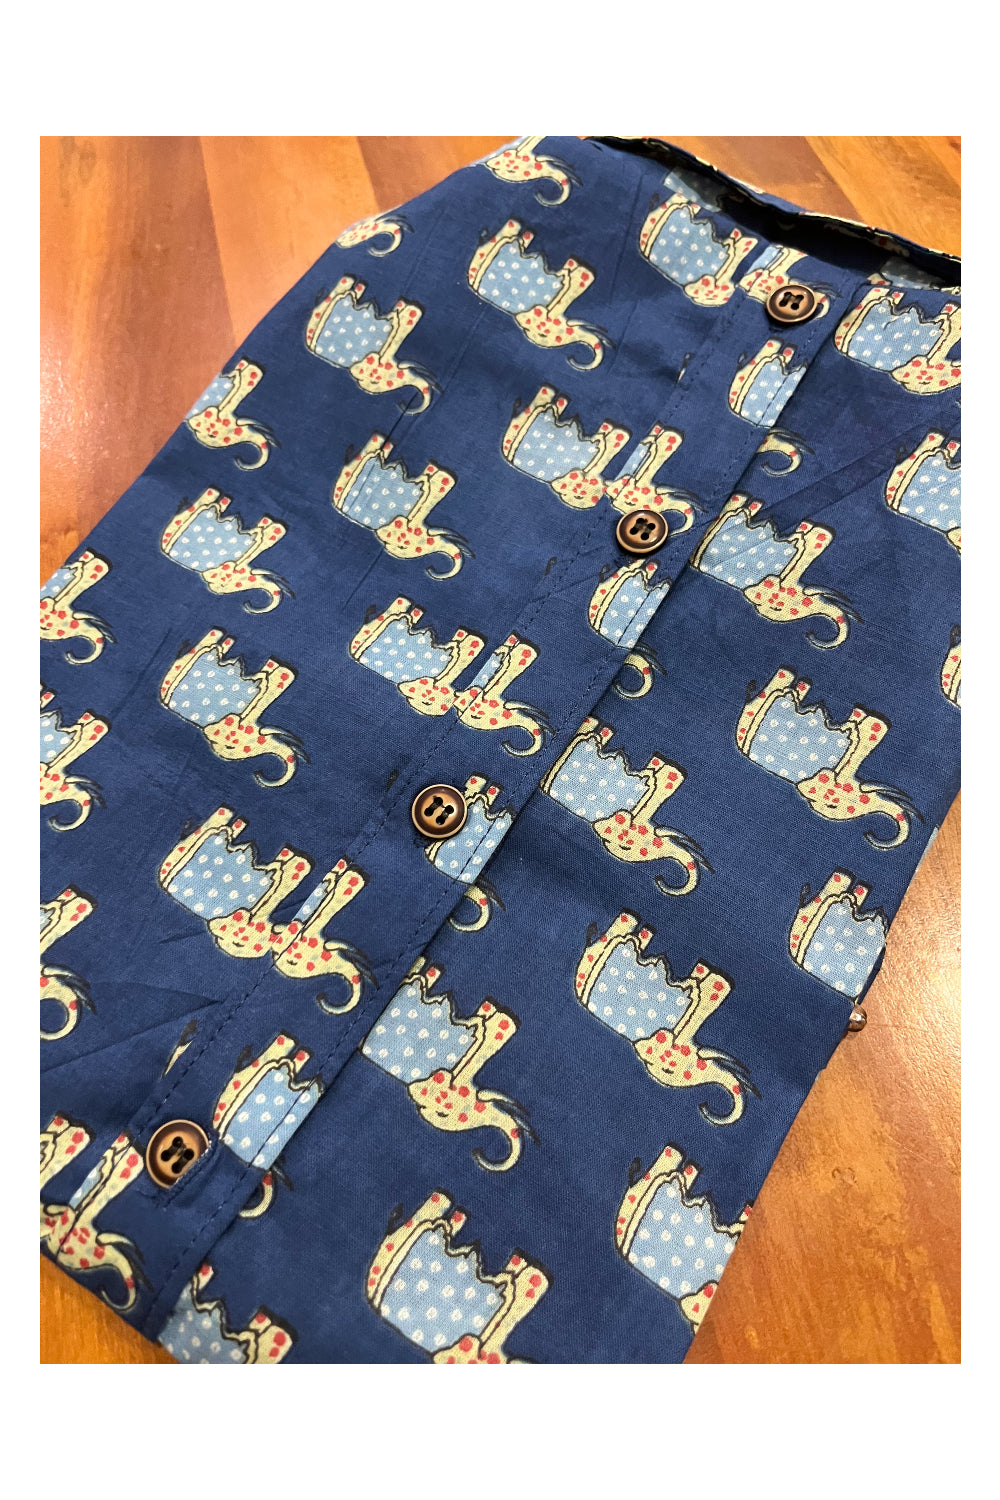 Southloom Jaipur Cotton Blue Elephant Hand Block Printed Shirt For Kids (Half Sleeves)